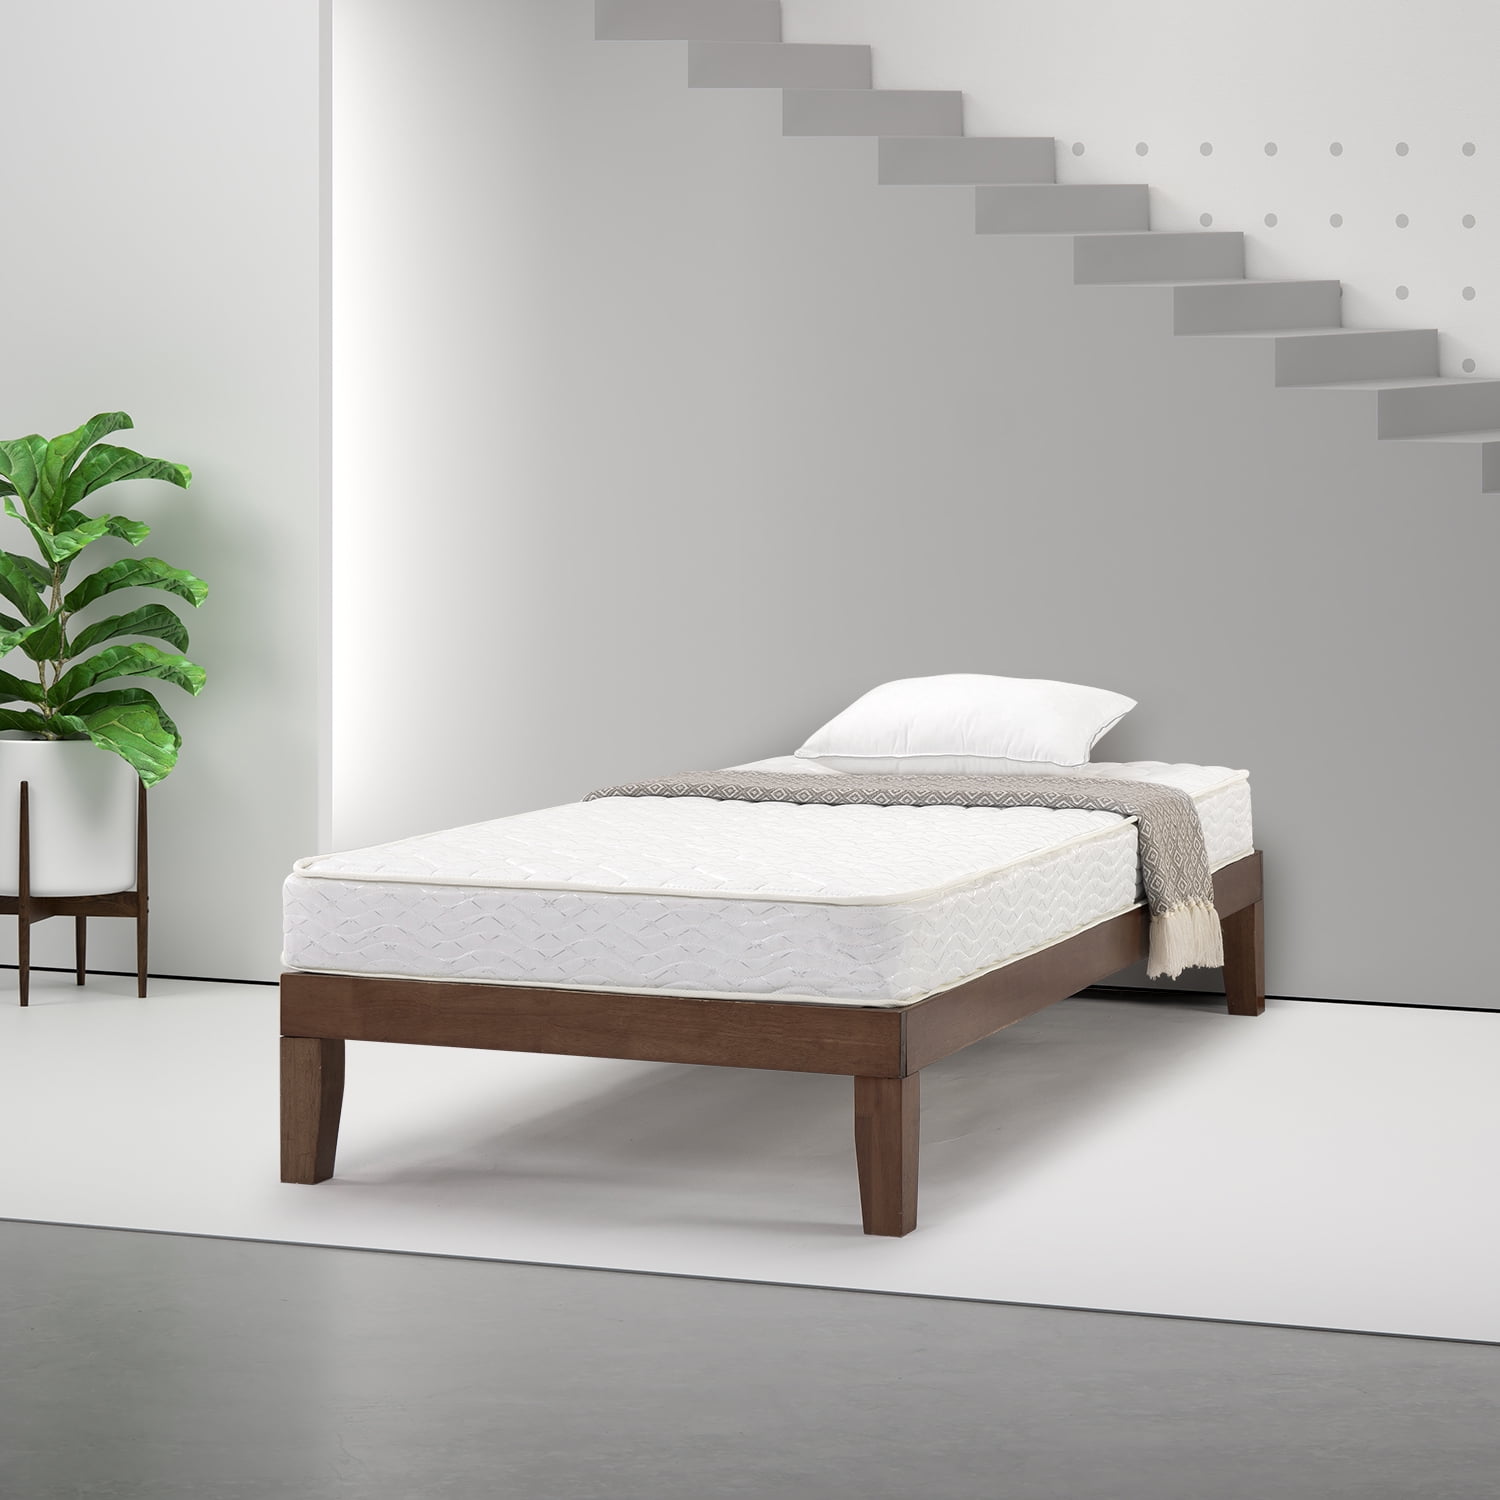 6" Inch Comfort Bunk Bed Mattress Twin Size Heavy Duty Coil Plush Bedroom Sleep 